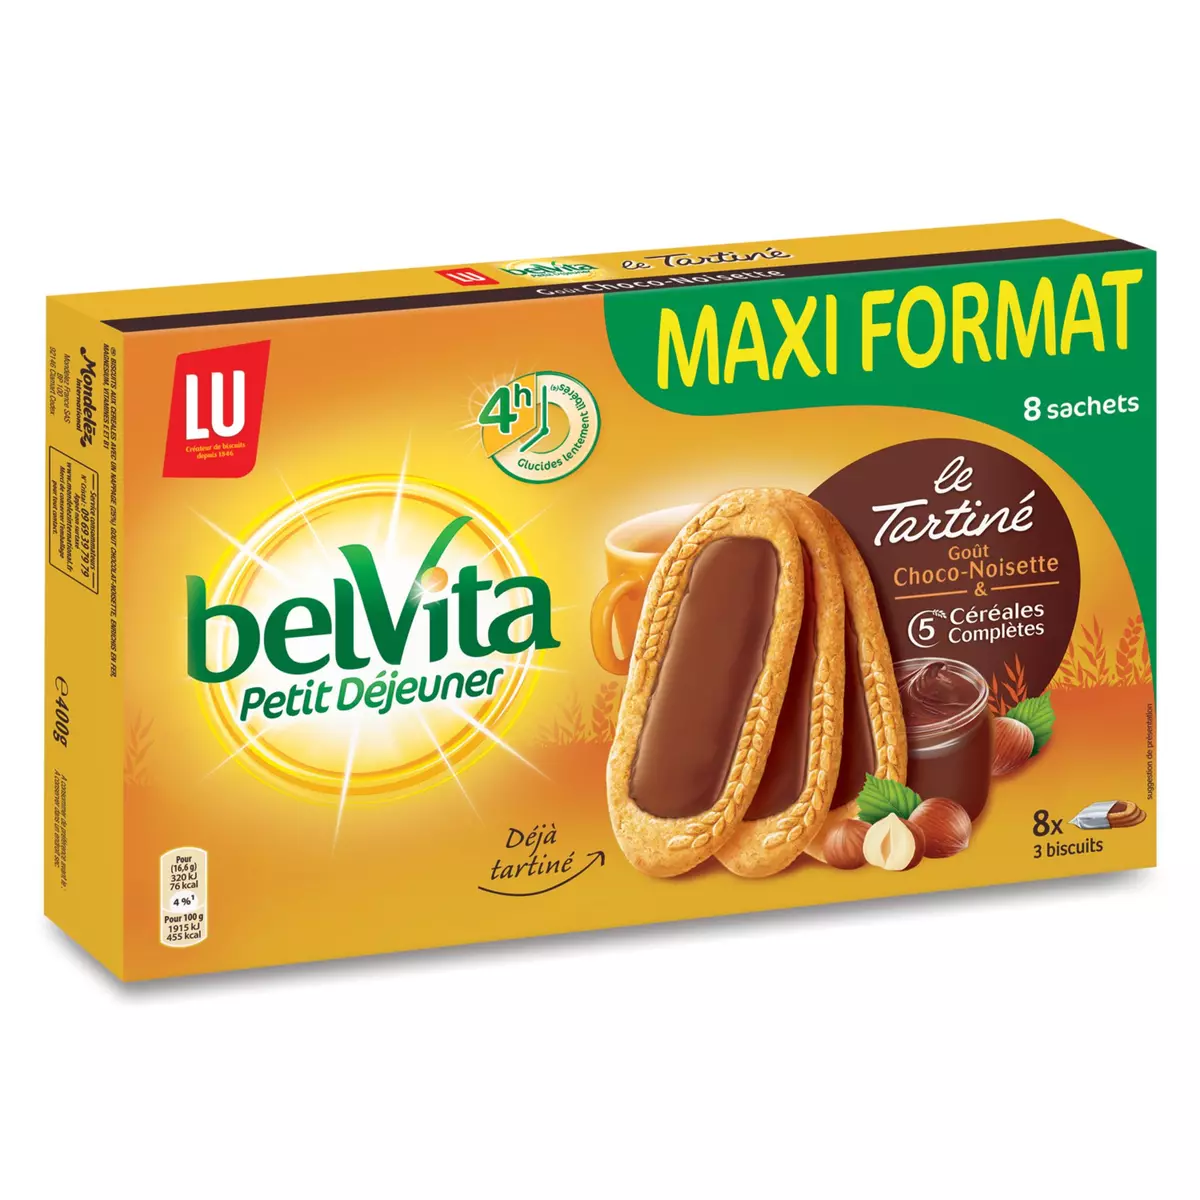 BELVITA Lu Belvita la tartine chocolat noisettes 400g maxi format